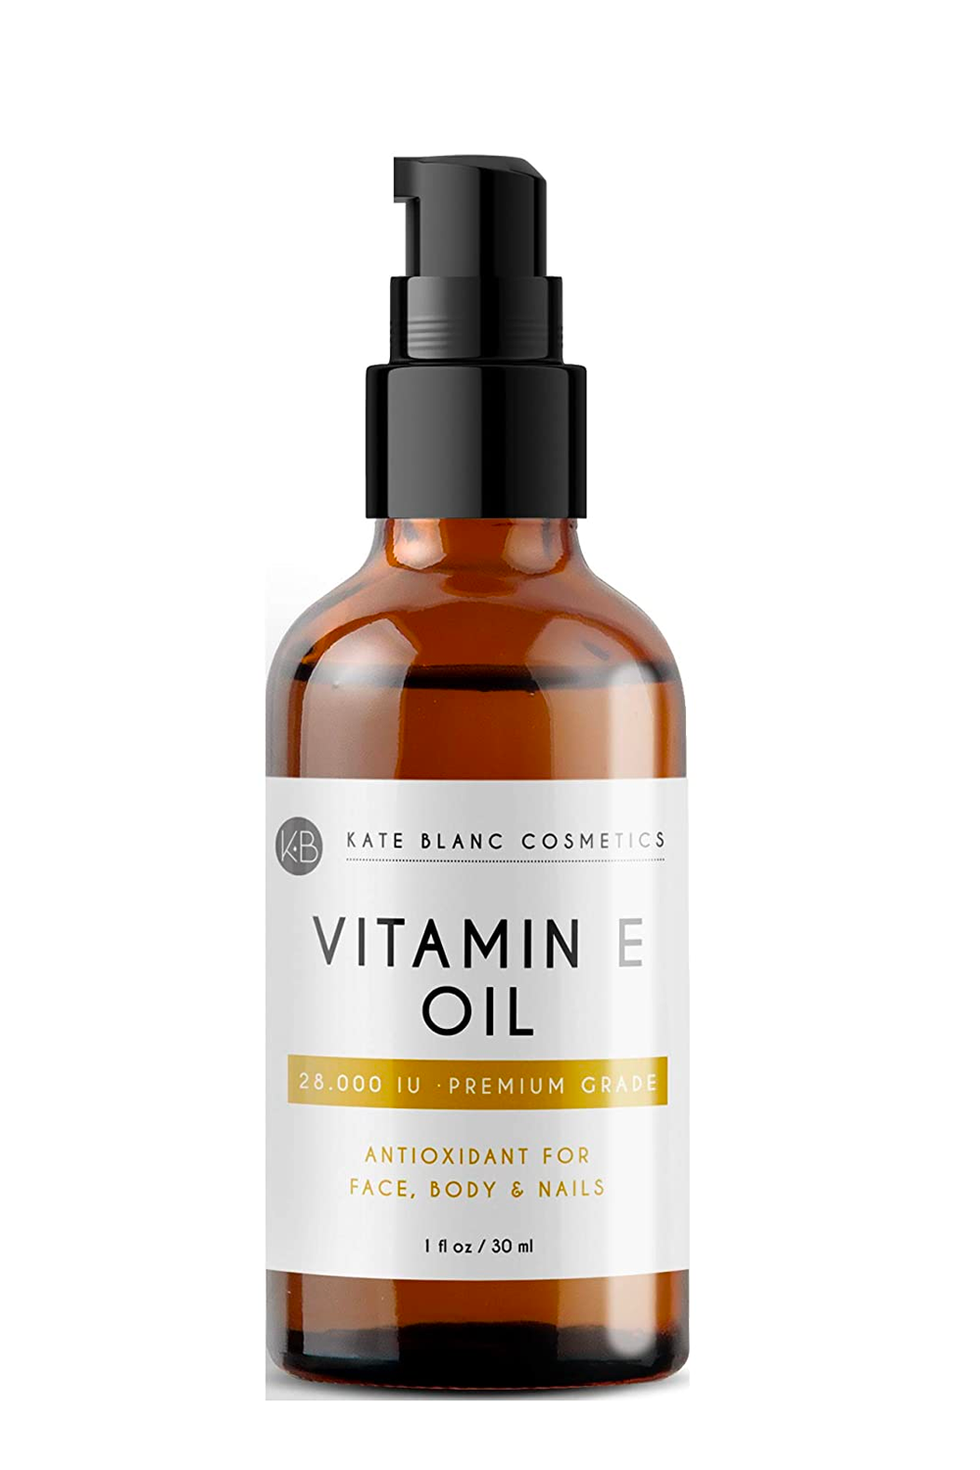 Kate Blanc Cosmetics Vitamin E Oil